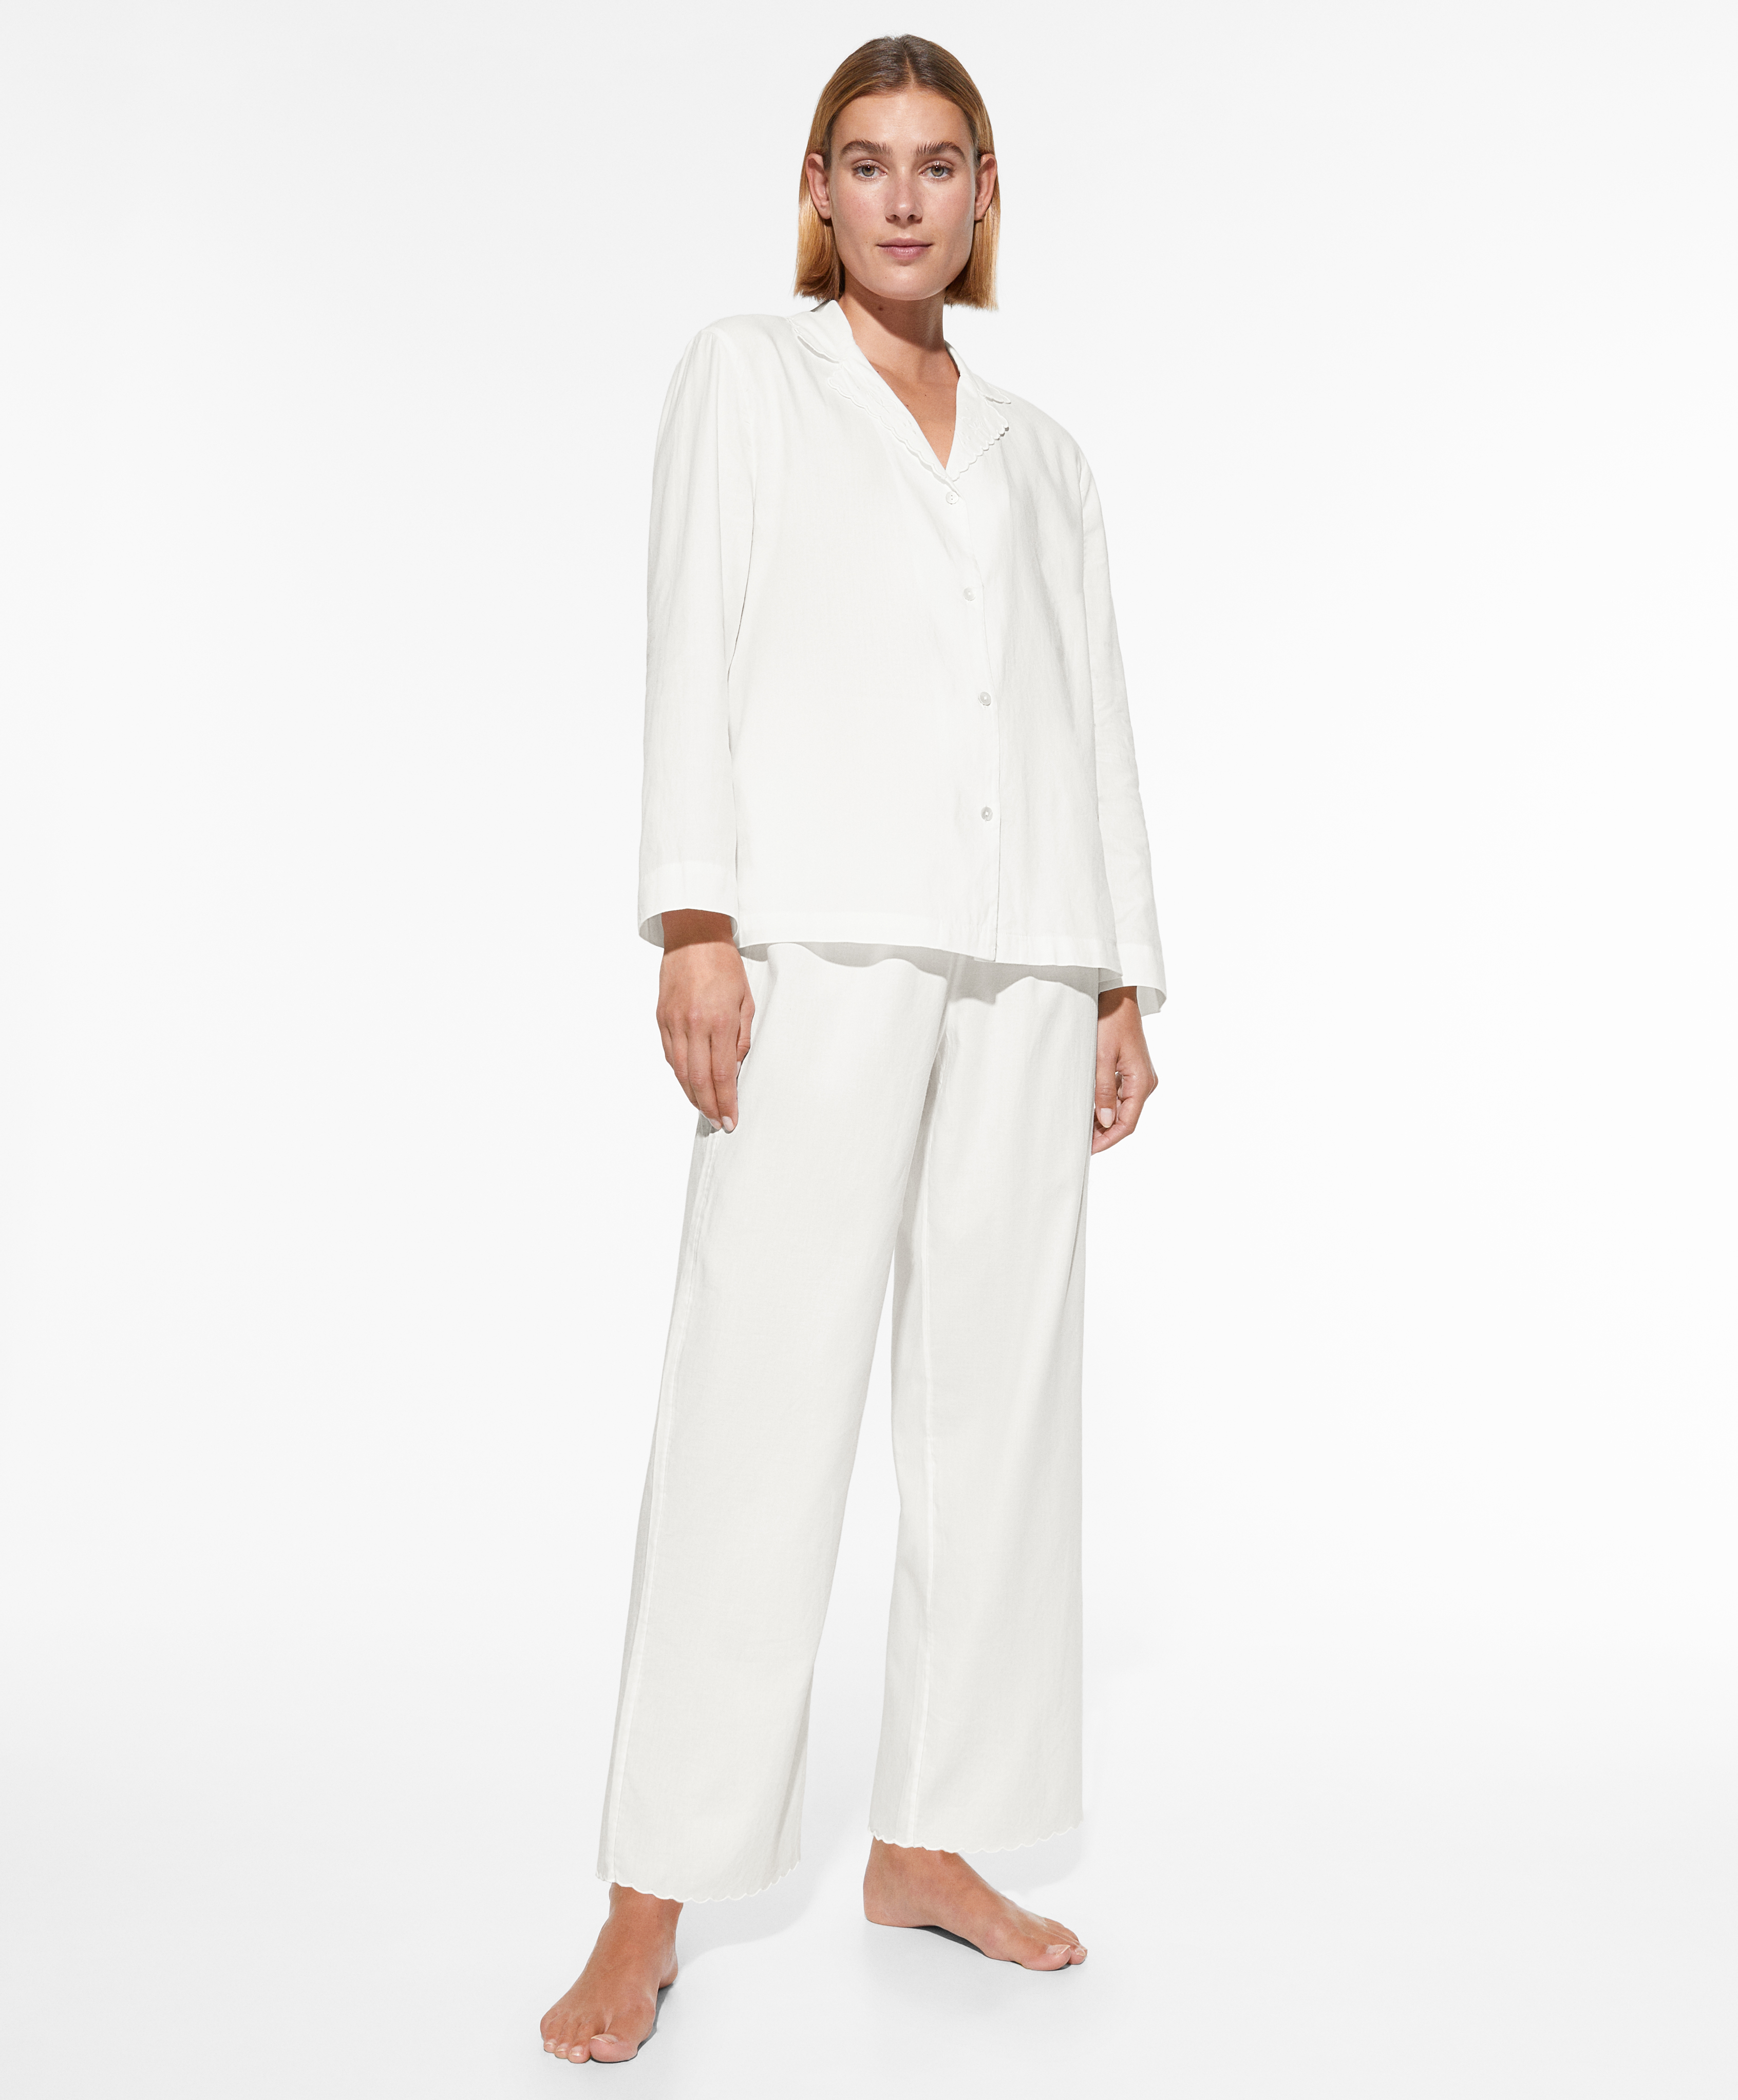 Conjunto pijama largo 100% algodón blanco